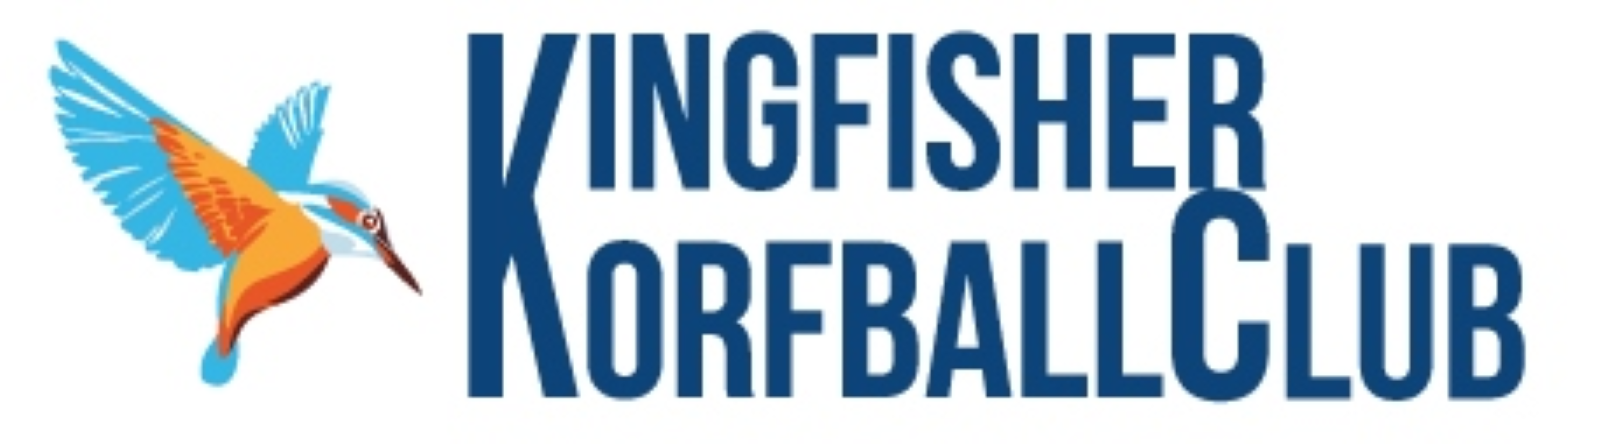 Kingfisher Korfball Club community image